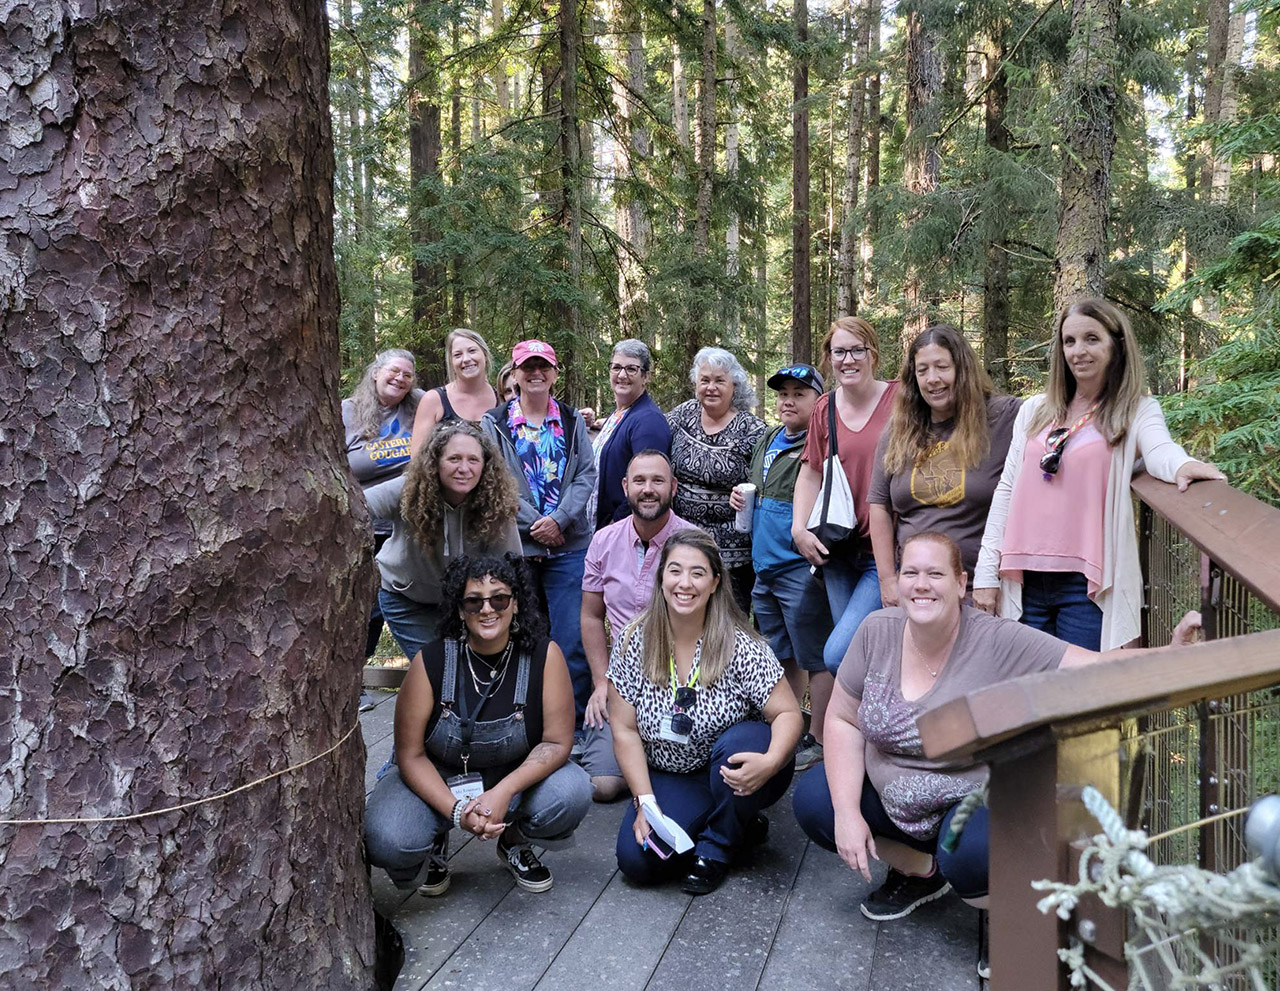 The RAN consortium crew at the Redwood Skywalk